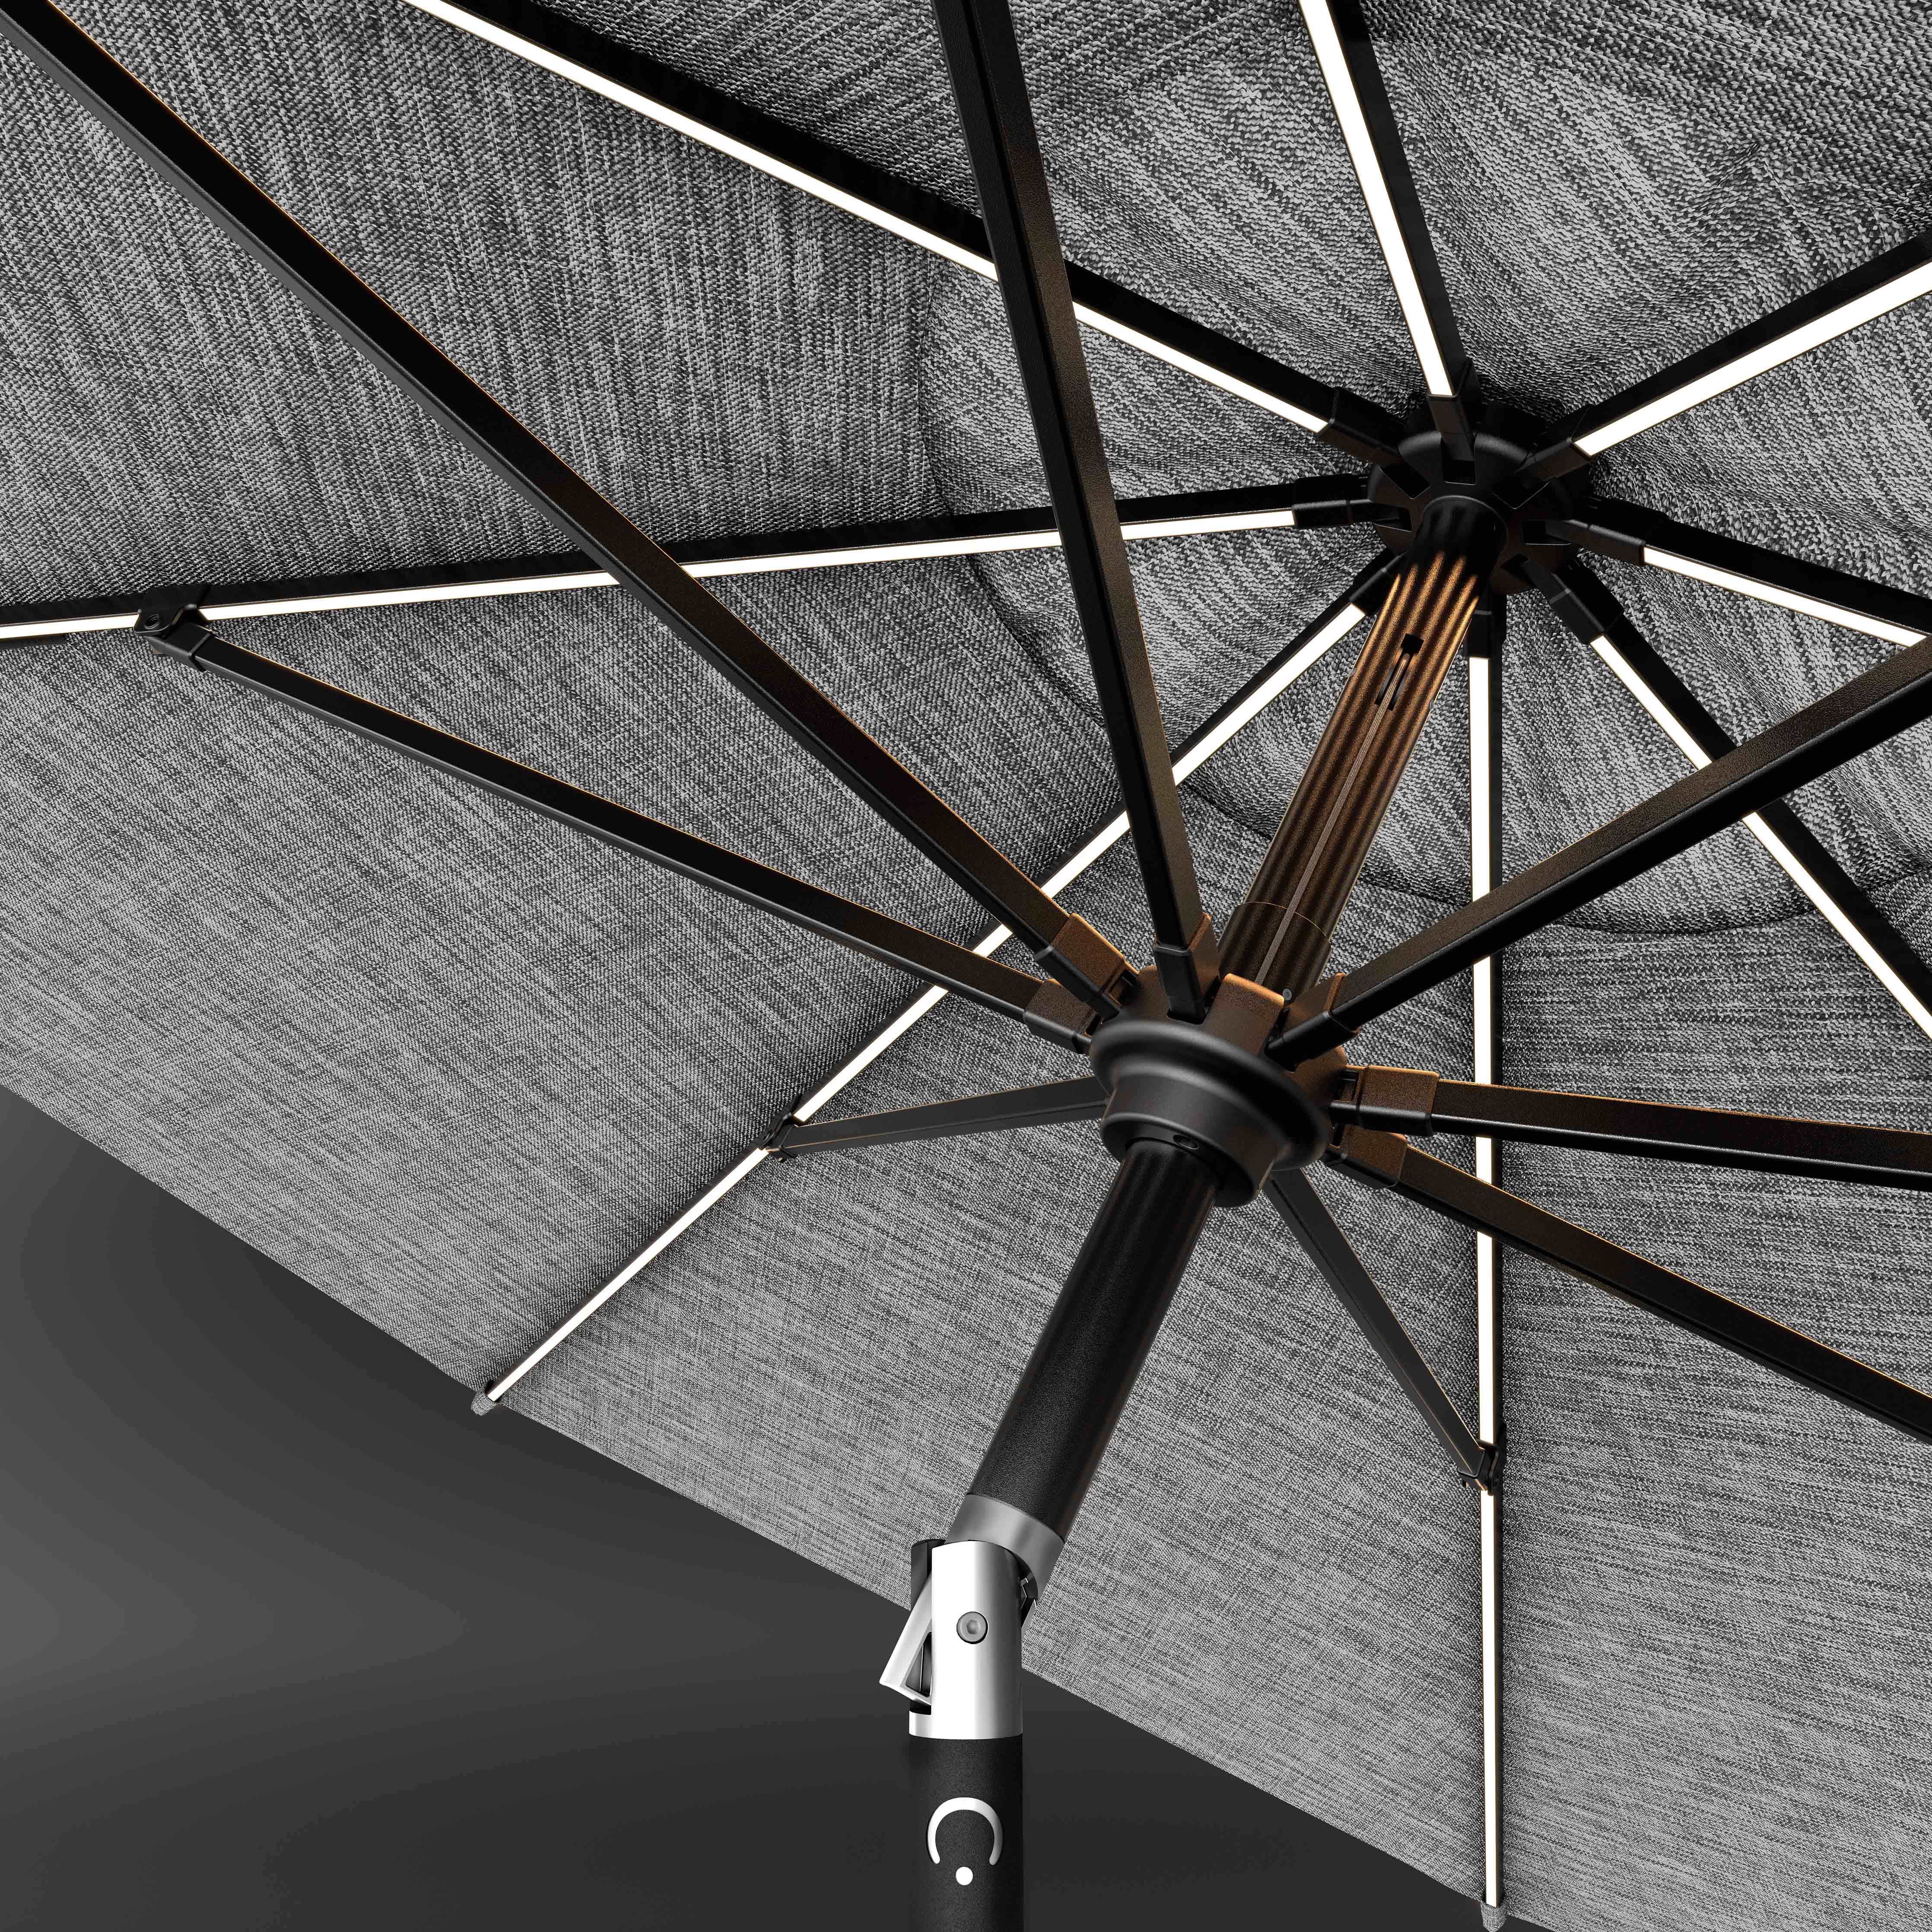 The LED Swilt™ - Sunbrella Cast Slate